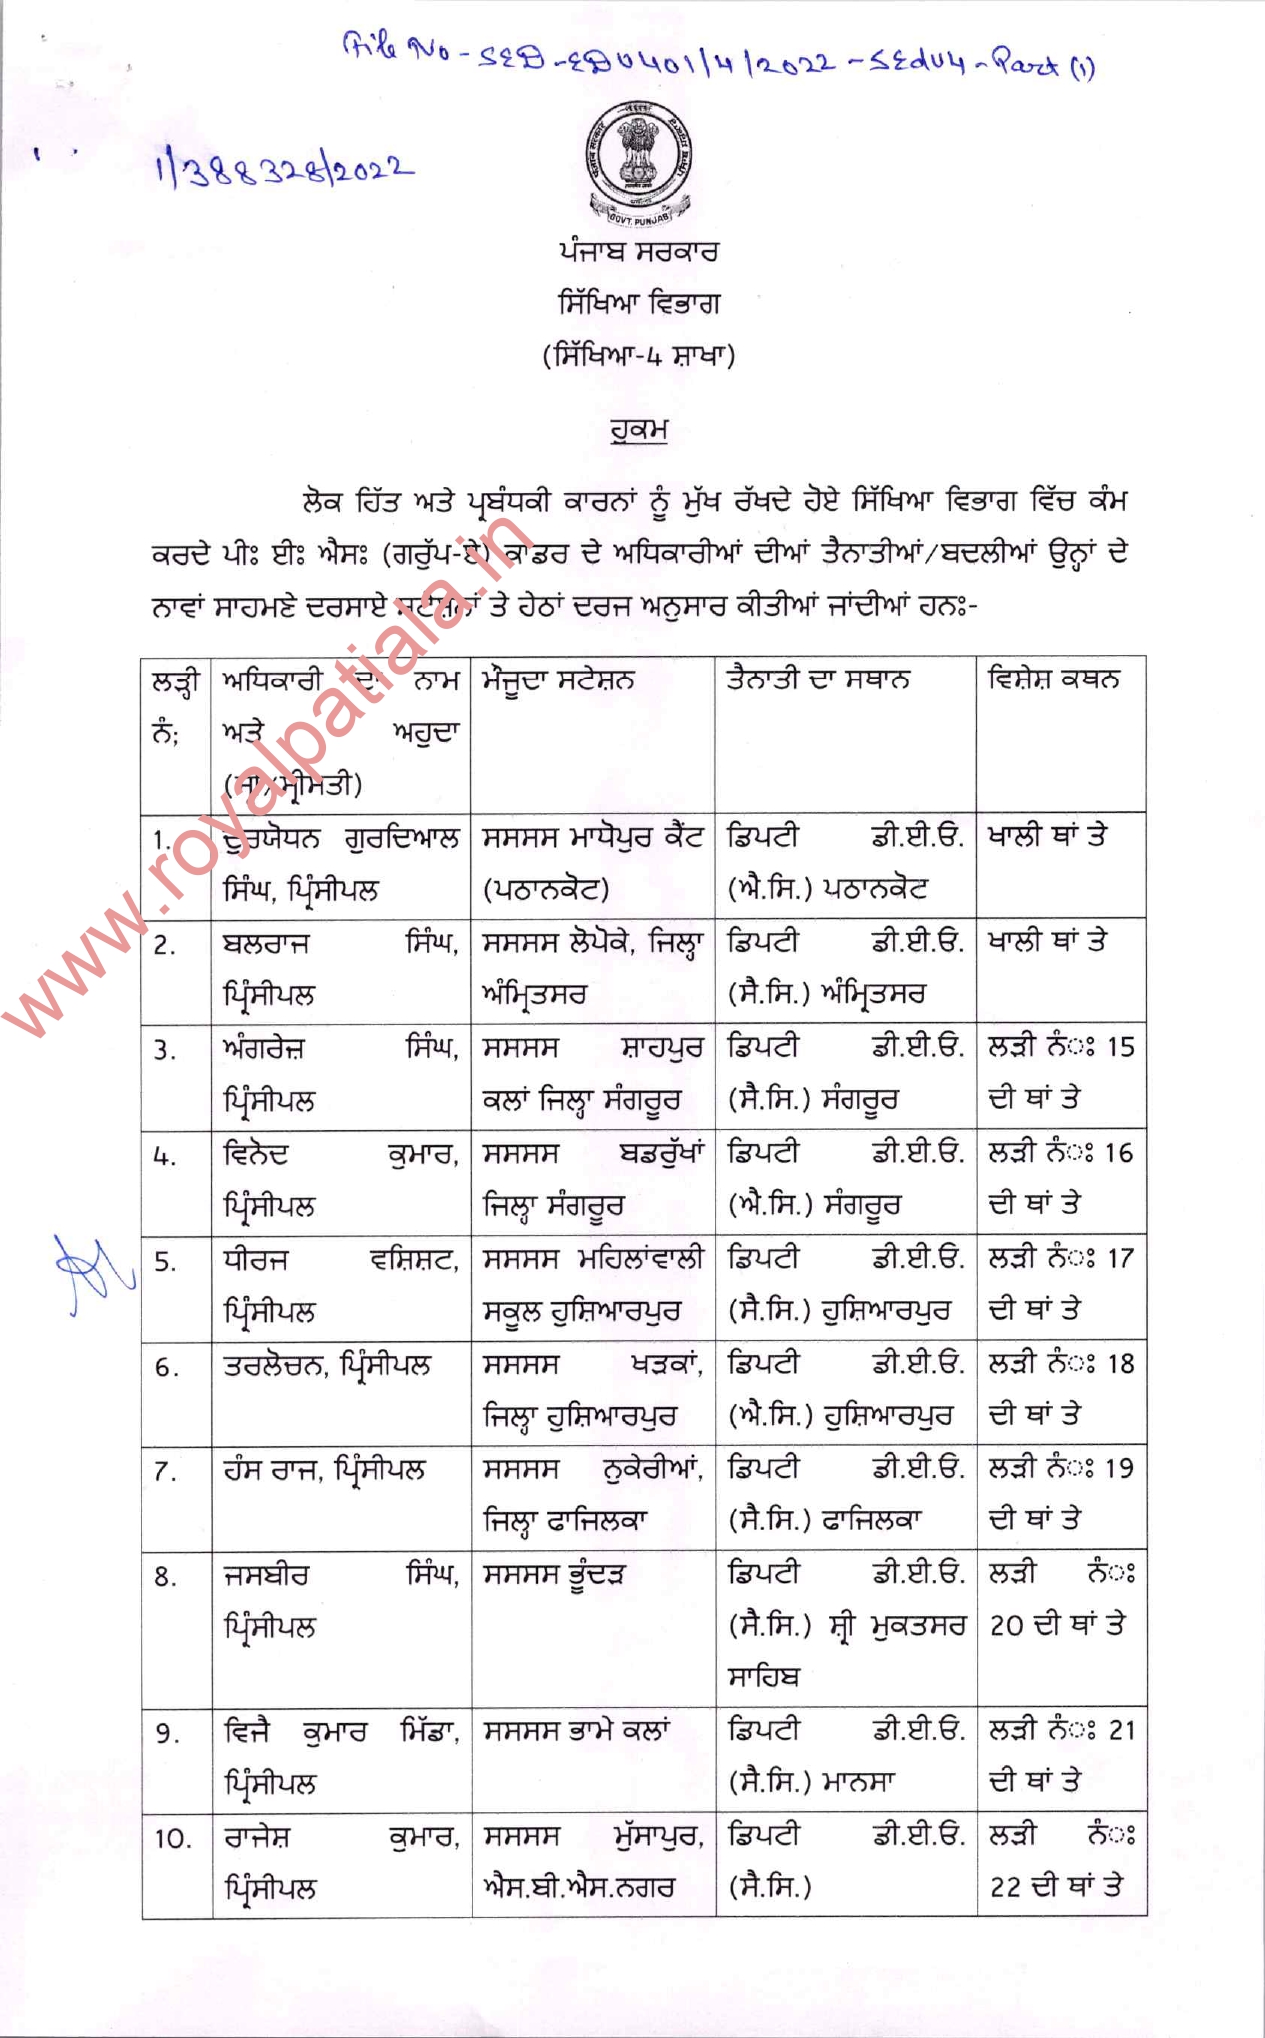 Punjab education department transfers; 25 PES transferred 